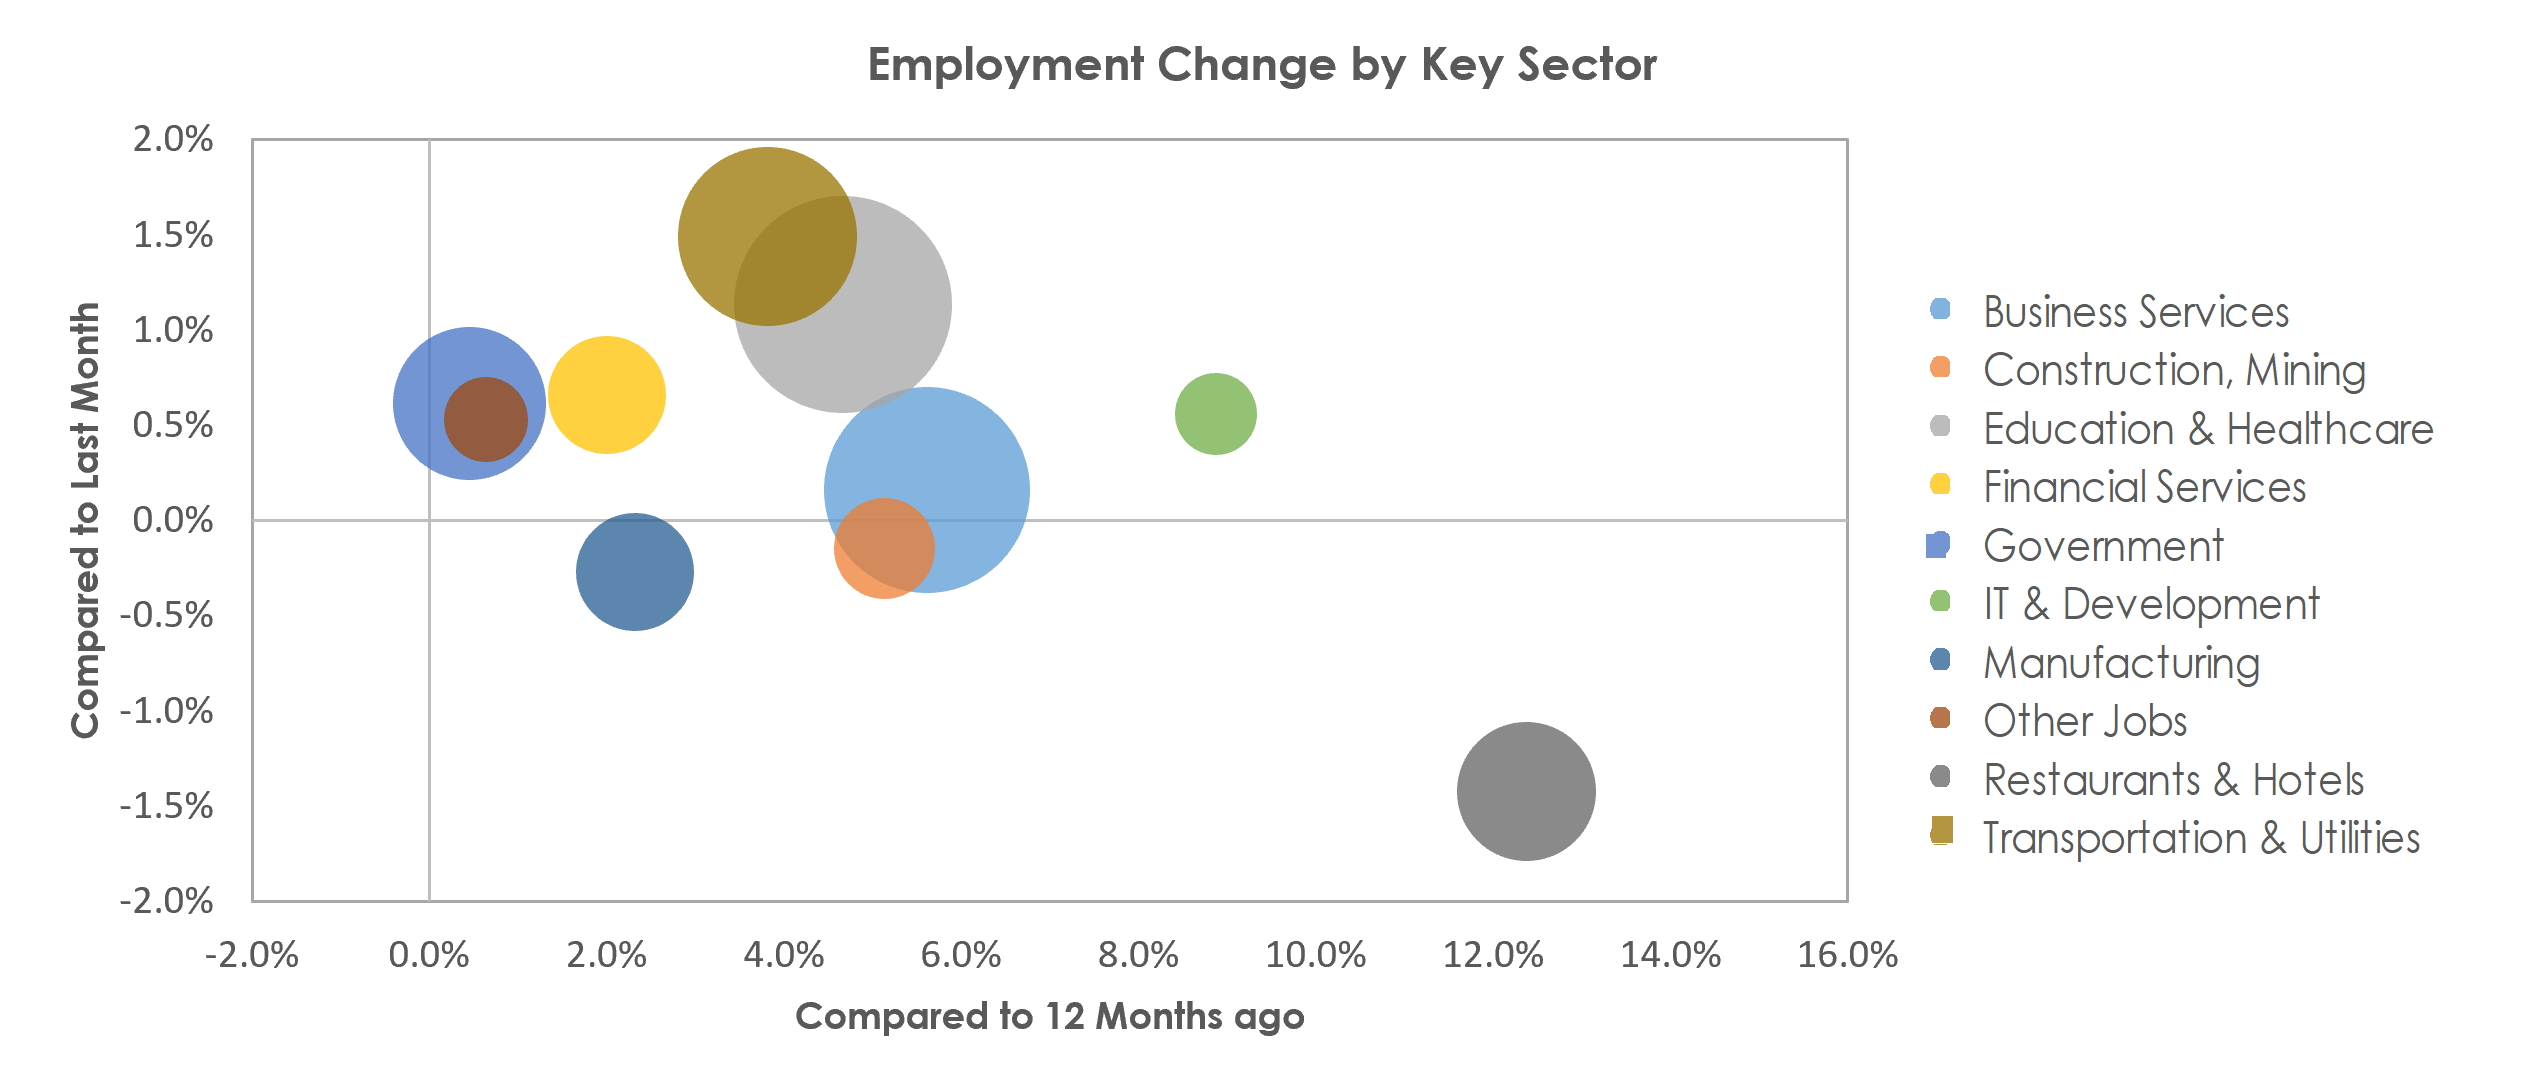 Boston-Cambridge-Nashua, MA-NH Unemployment by Industry November 2022